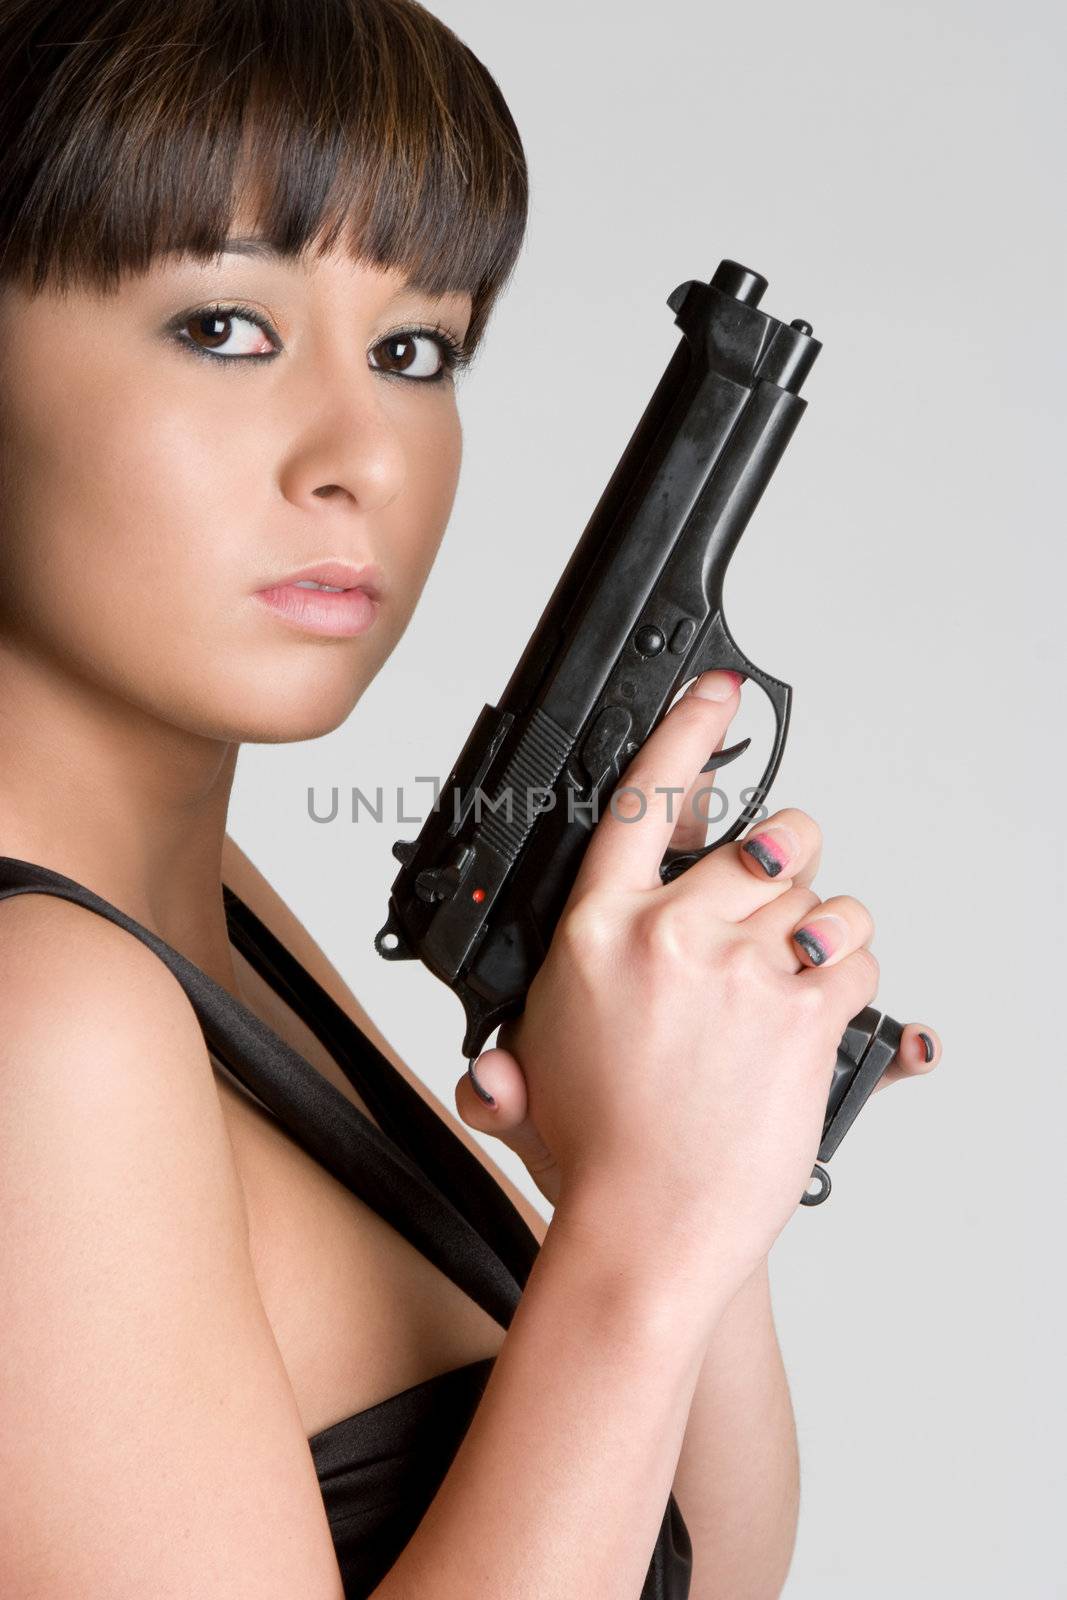 Asian Gun Woman by keeweeboy